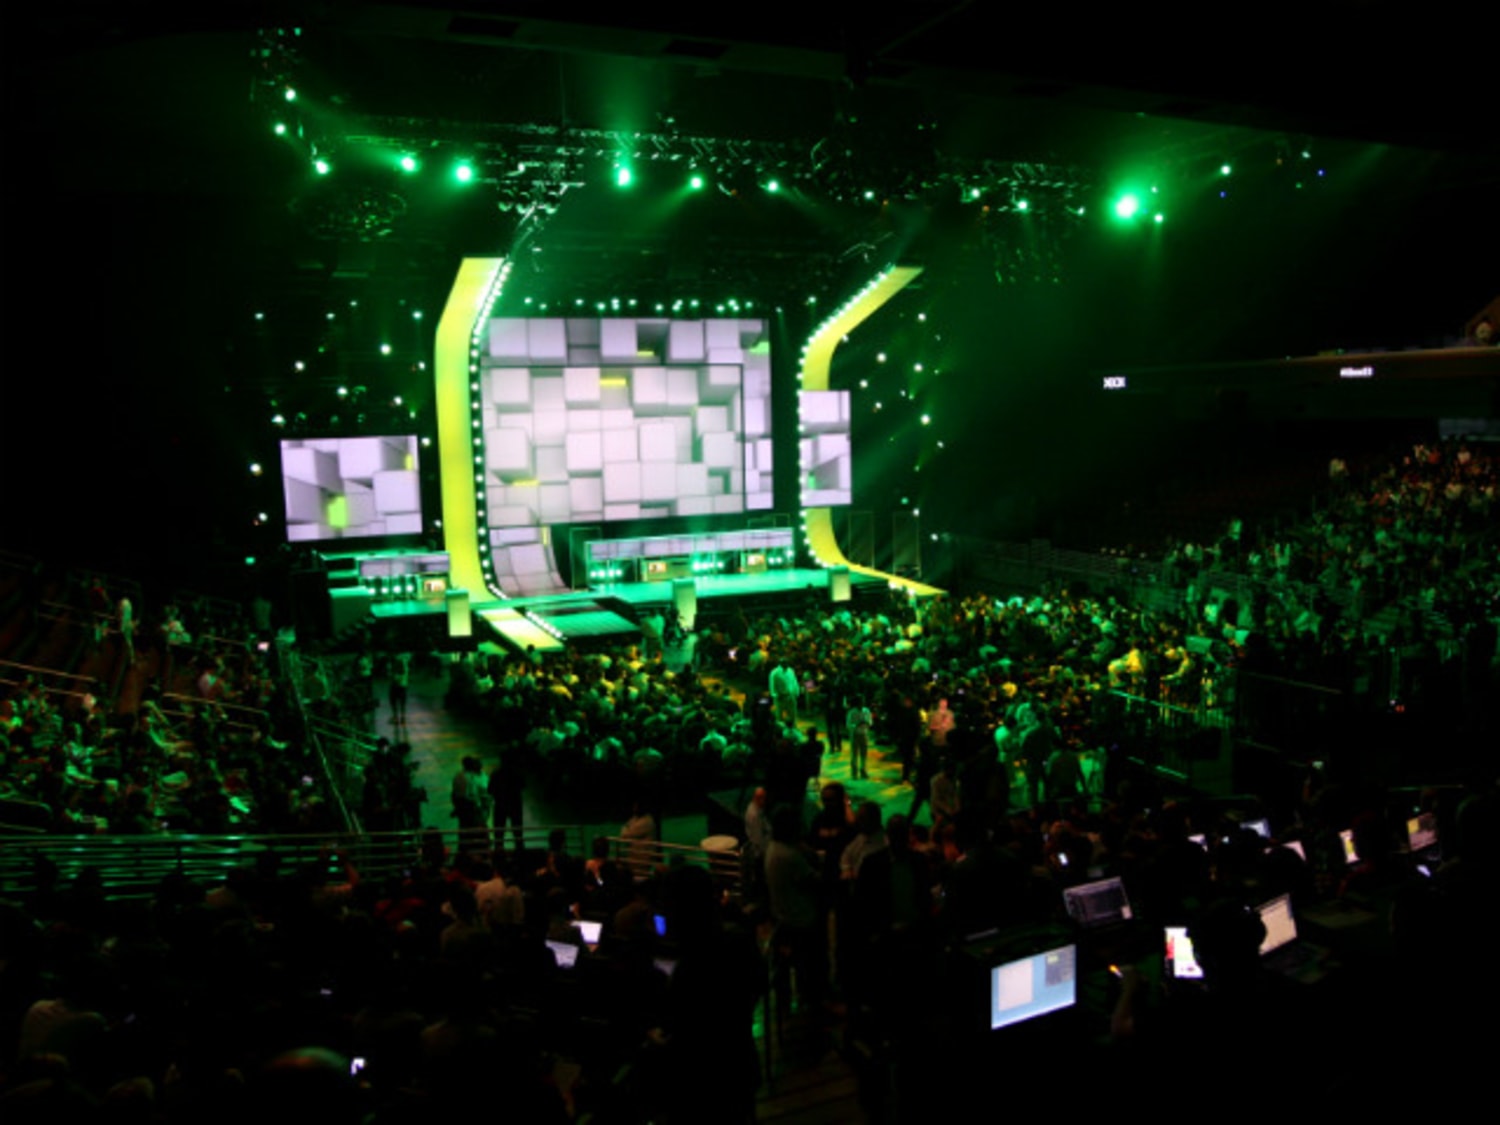 E3 2012: Xbox 2012 